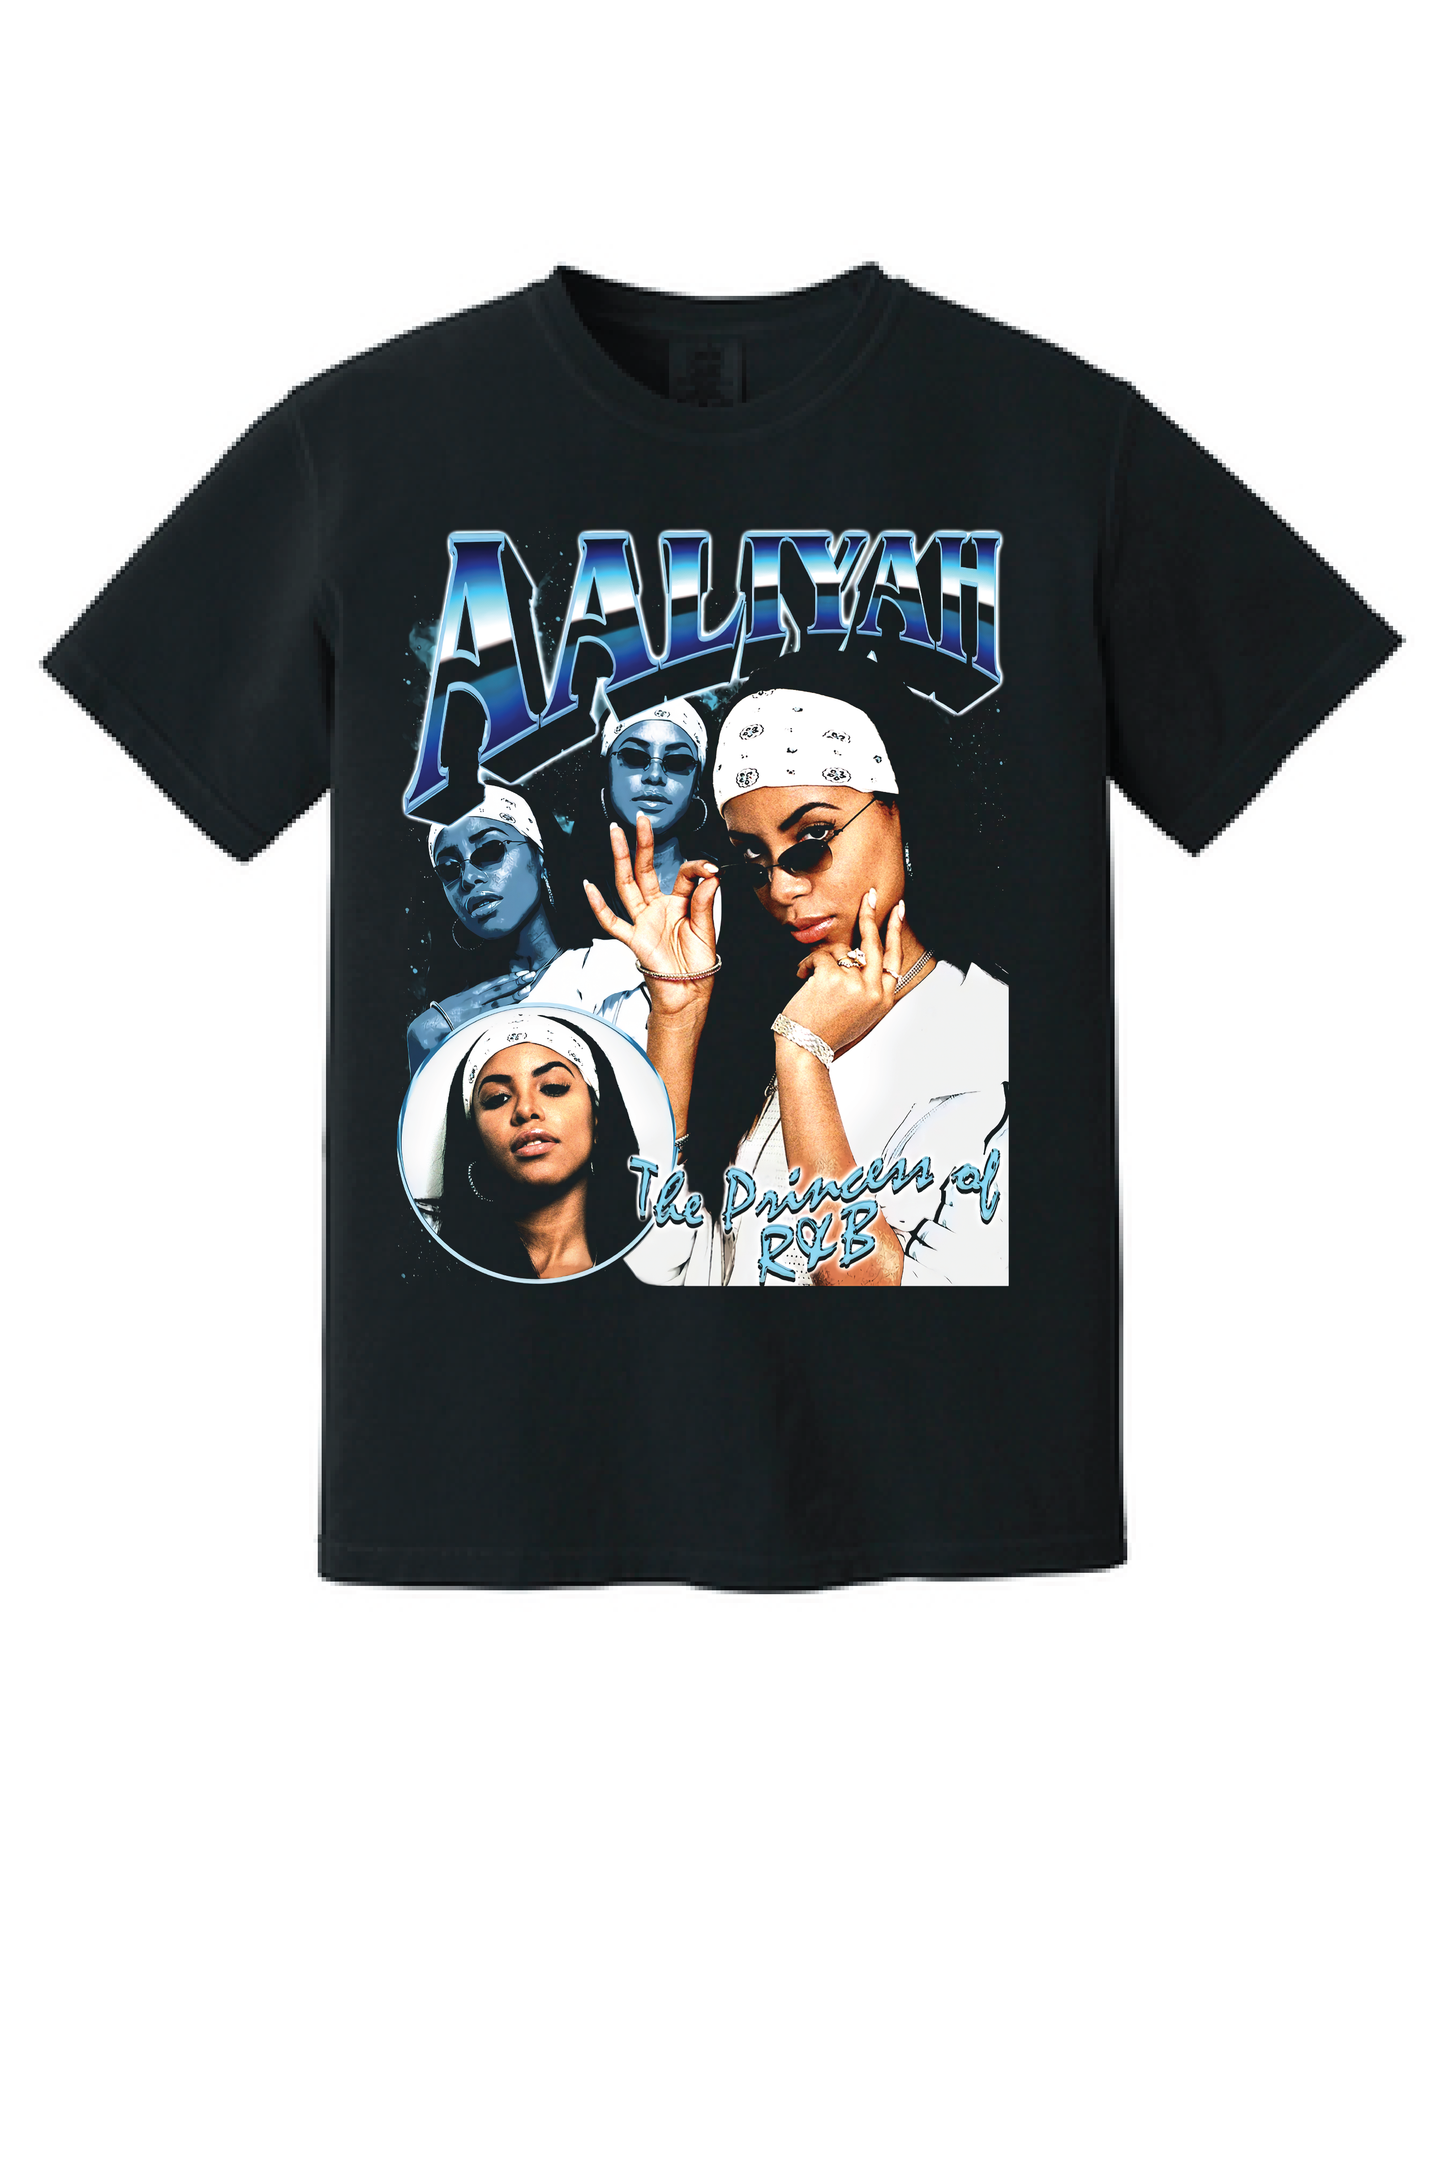 Aaliyah Vintage Style 90's Bootleg T-shirt Unisex Sizes